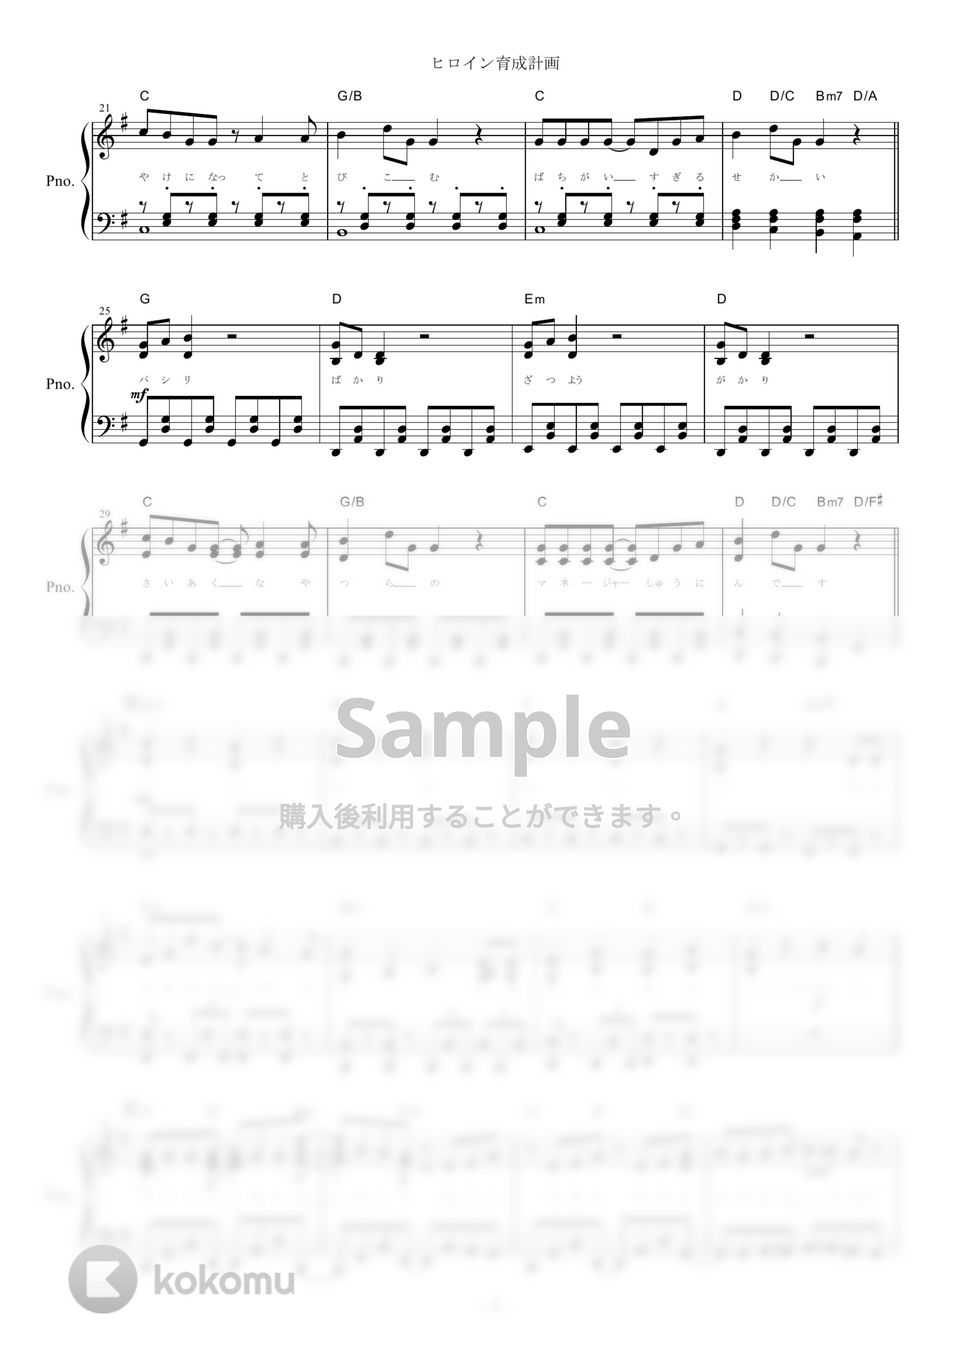 HoneyWorks - ヒロイン育成計画 (ピアノ楽譜/全７ページ) by yoshi